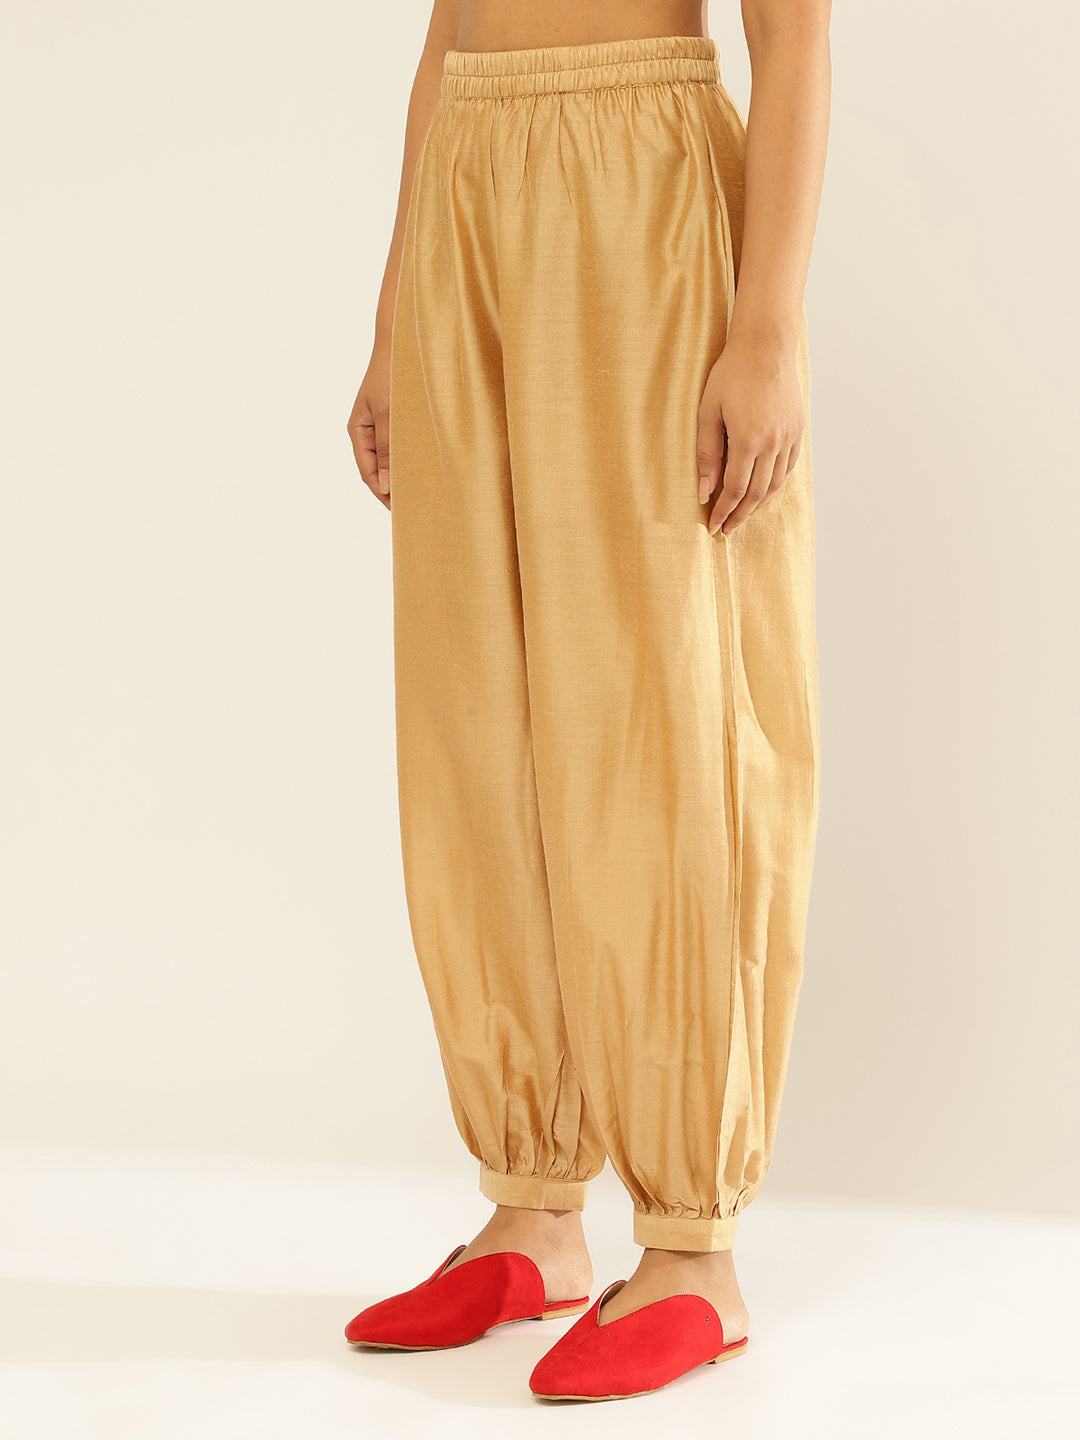 Cotton Viscose Elasticated Pathani Pants-Roseate Golden